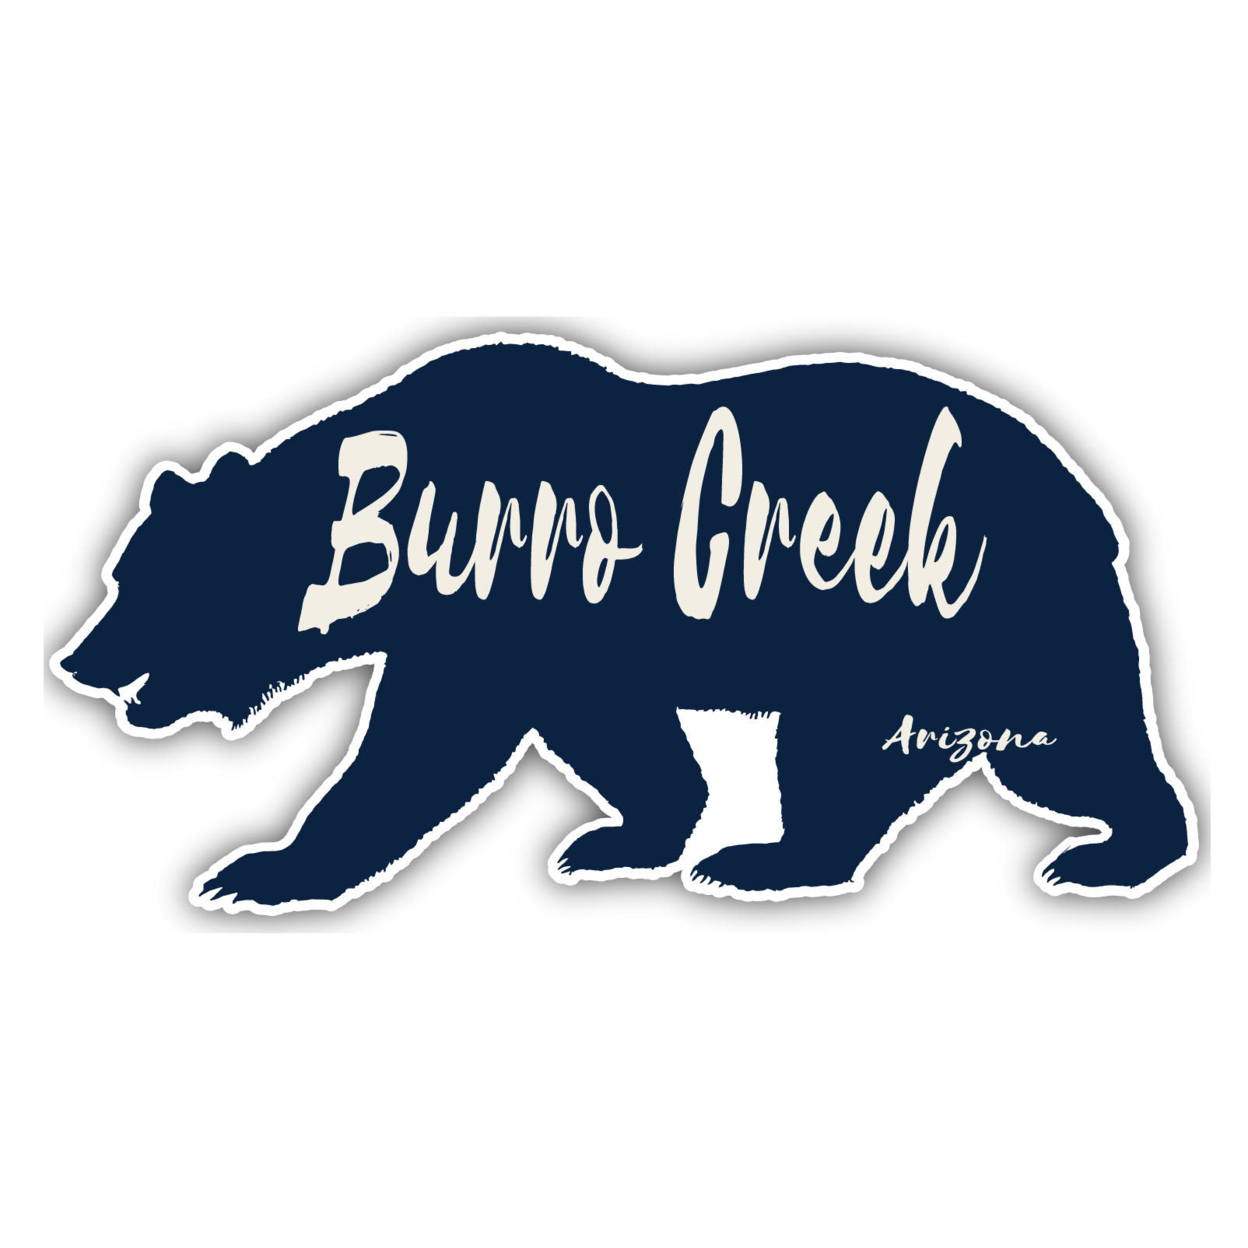 Burro Creek Arizona Souvenir Decorative Stickers (Choose Theme And Size) - 4-Pack, 6-Inch, Bear